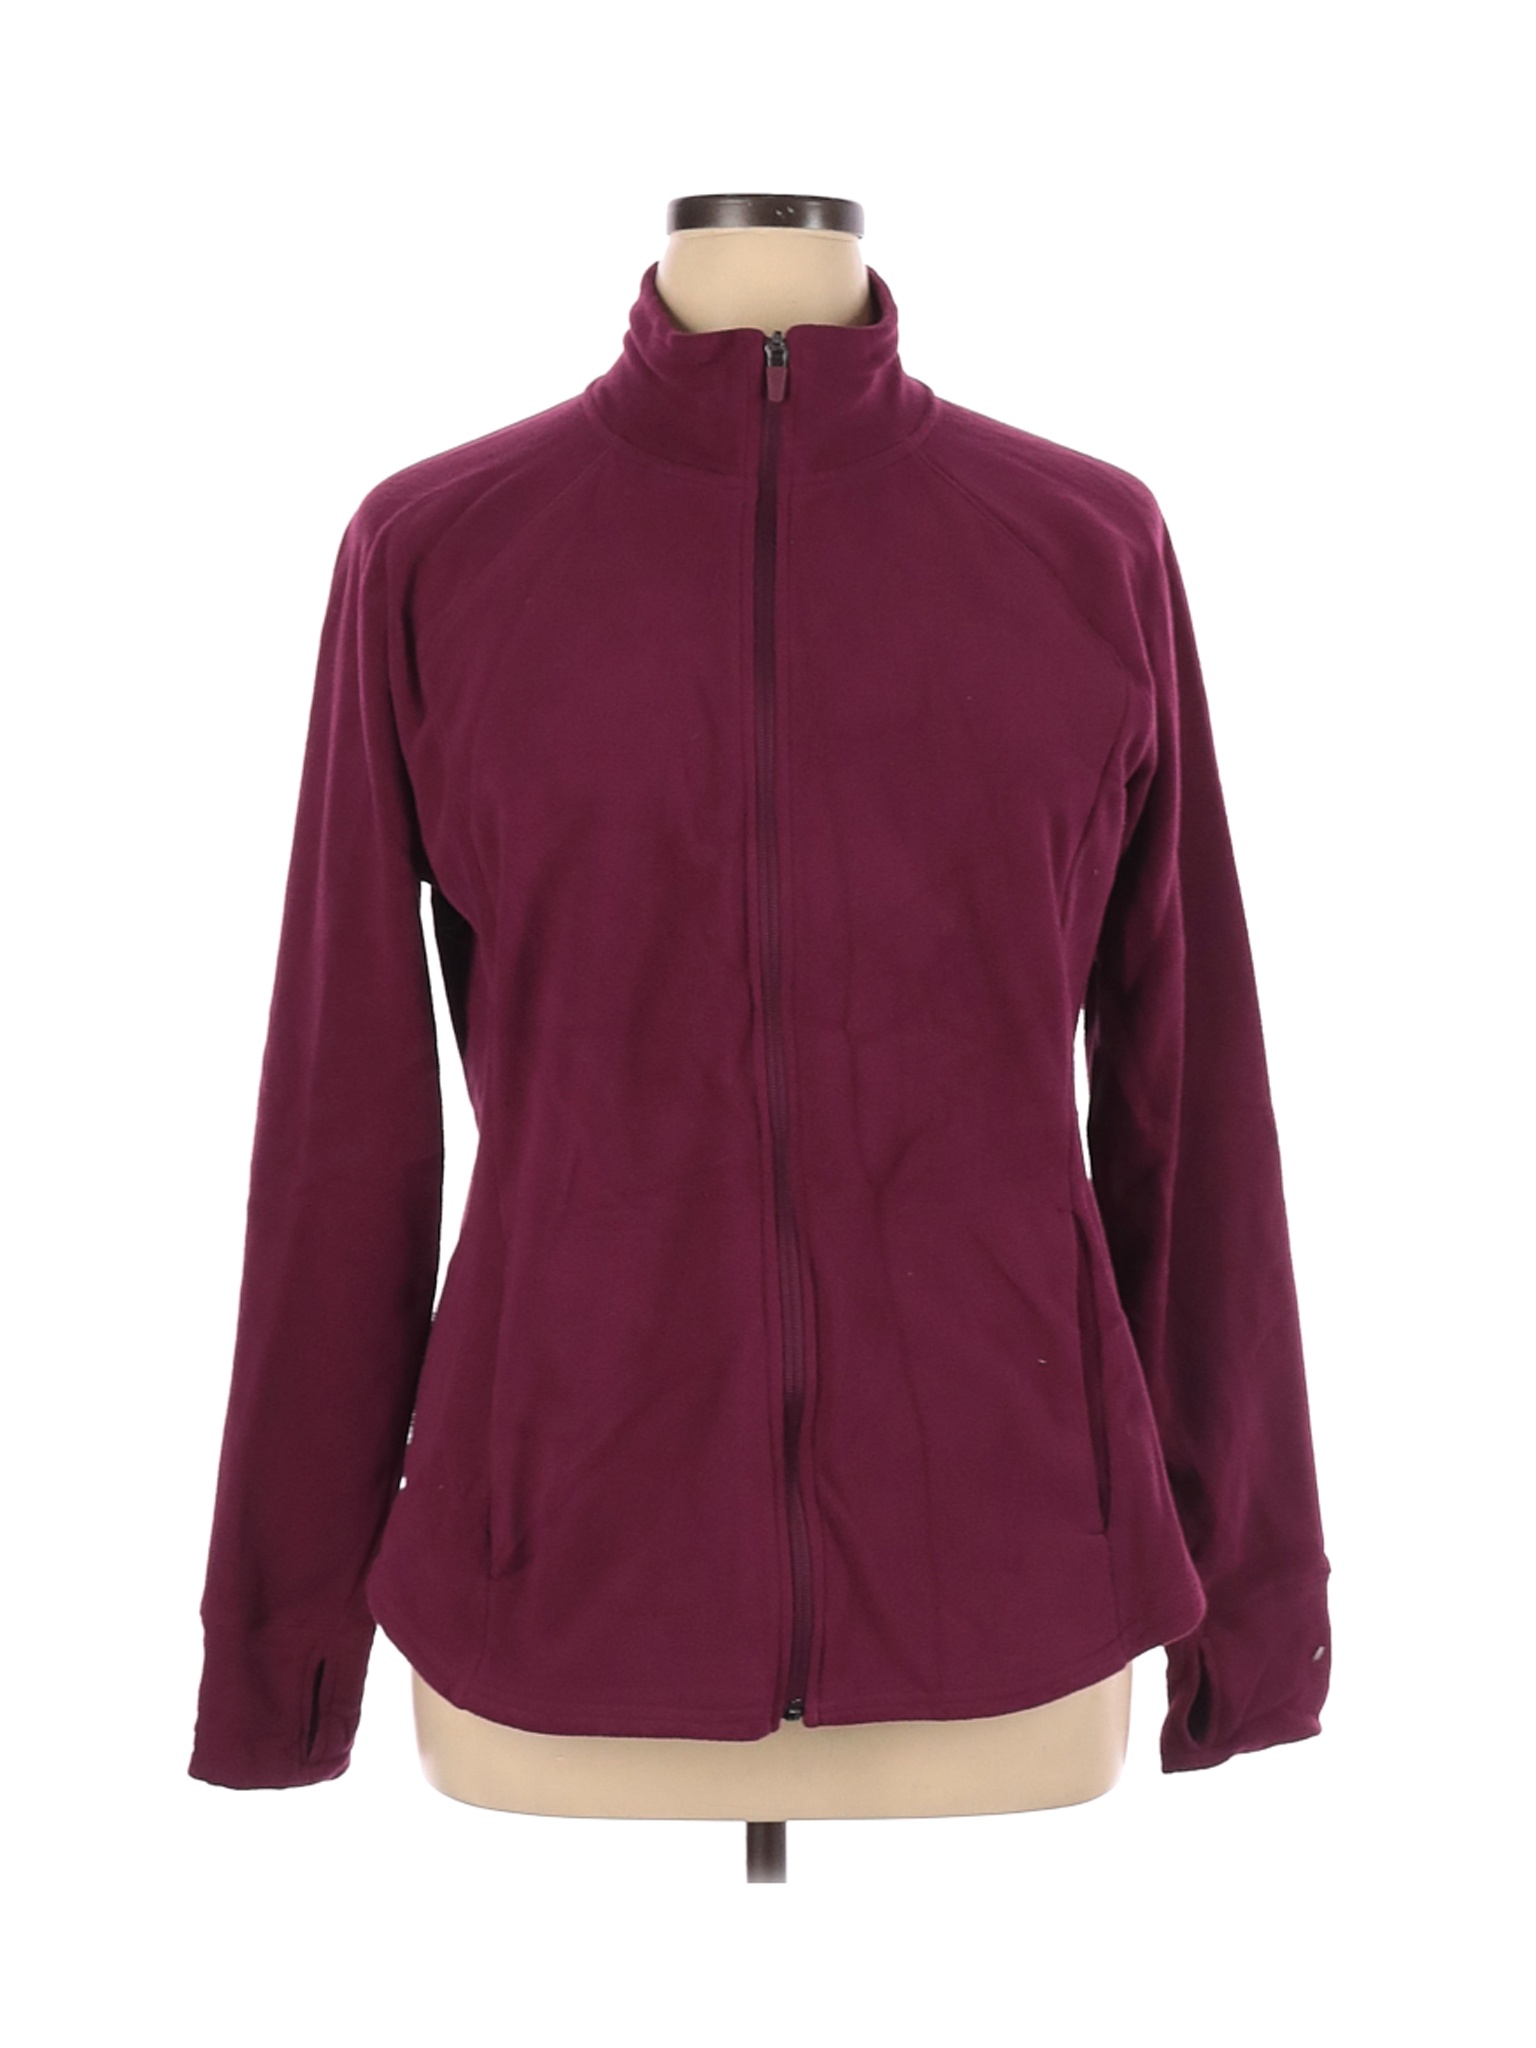 Active by Old Navy Women Purple Fleece XL | eBay